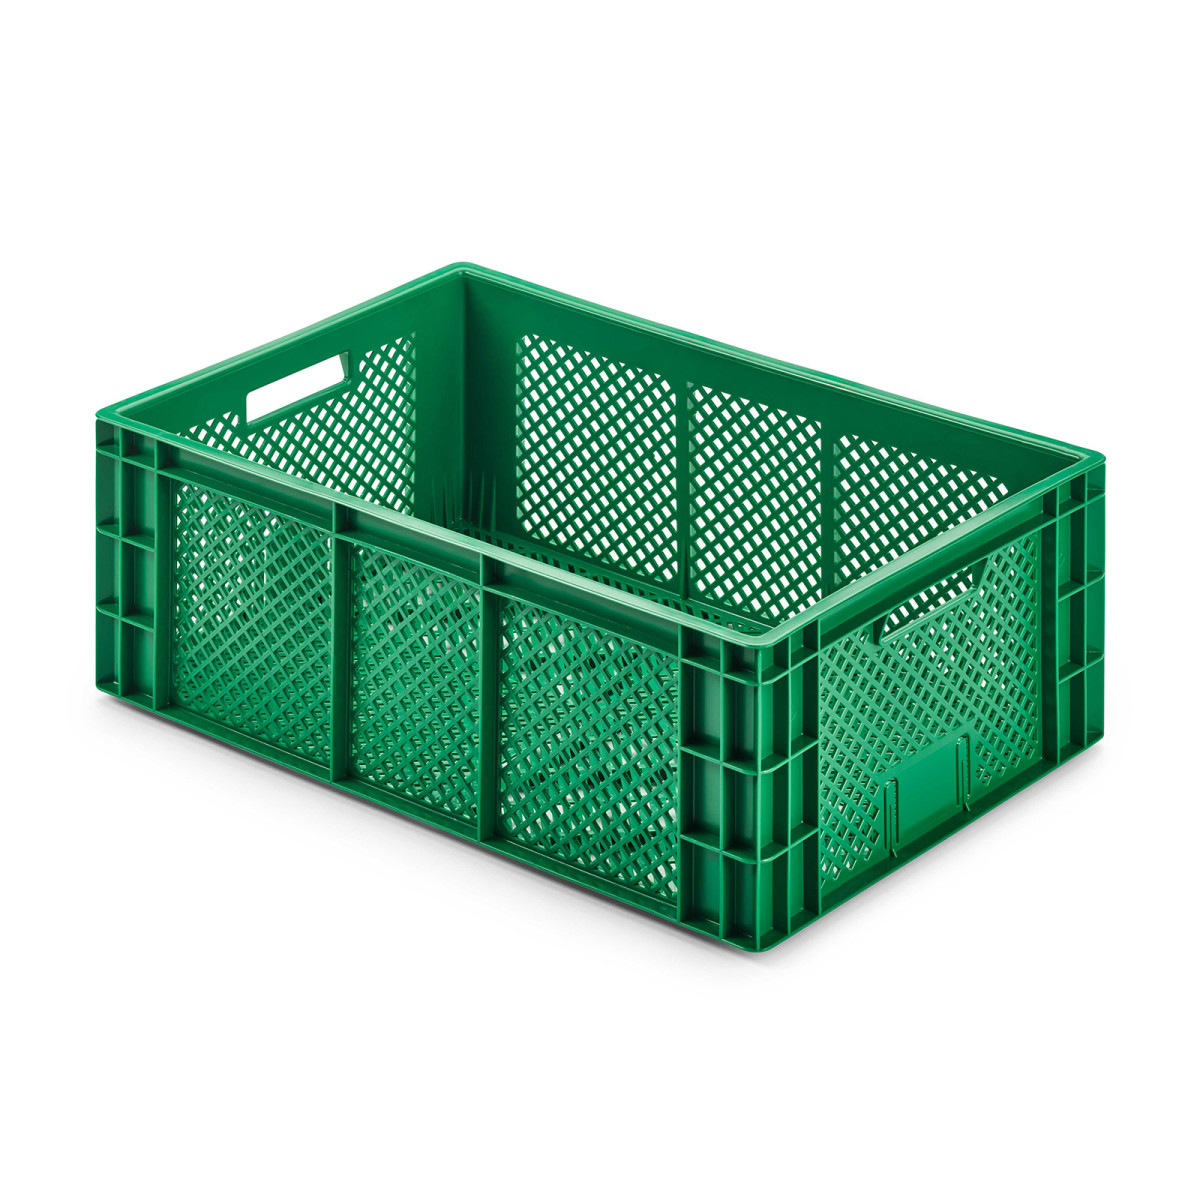 5 Stück GastlandoBox Grüne Kisten Erntekiste grün 60x40x20 cm neu Gastlando 